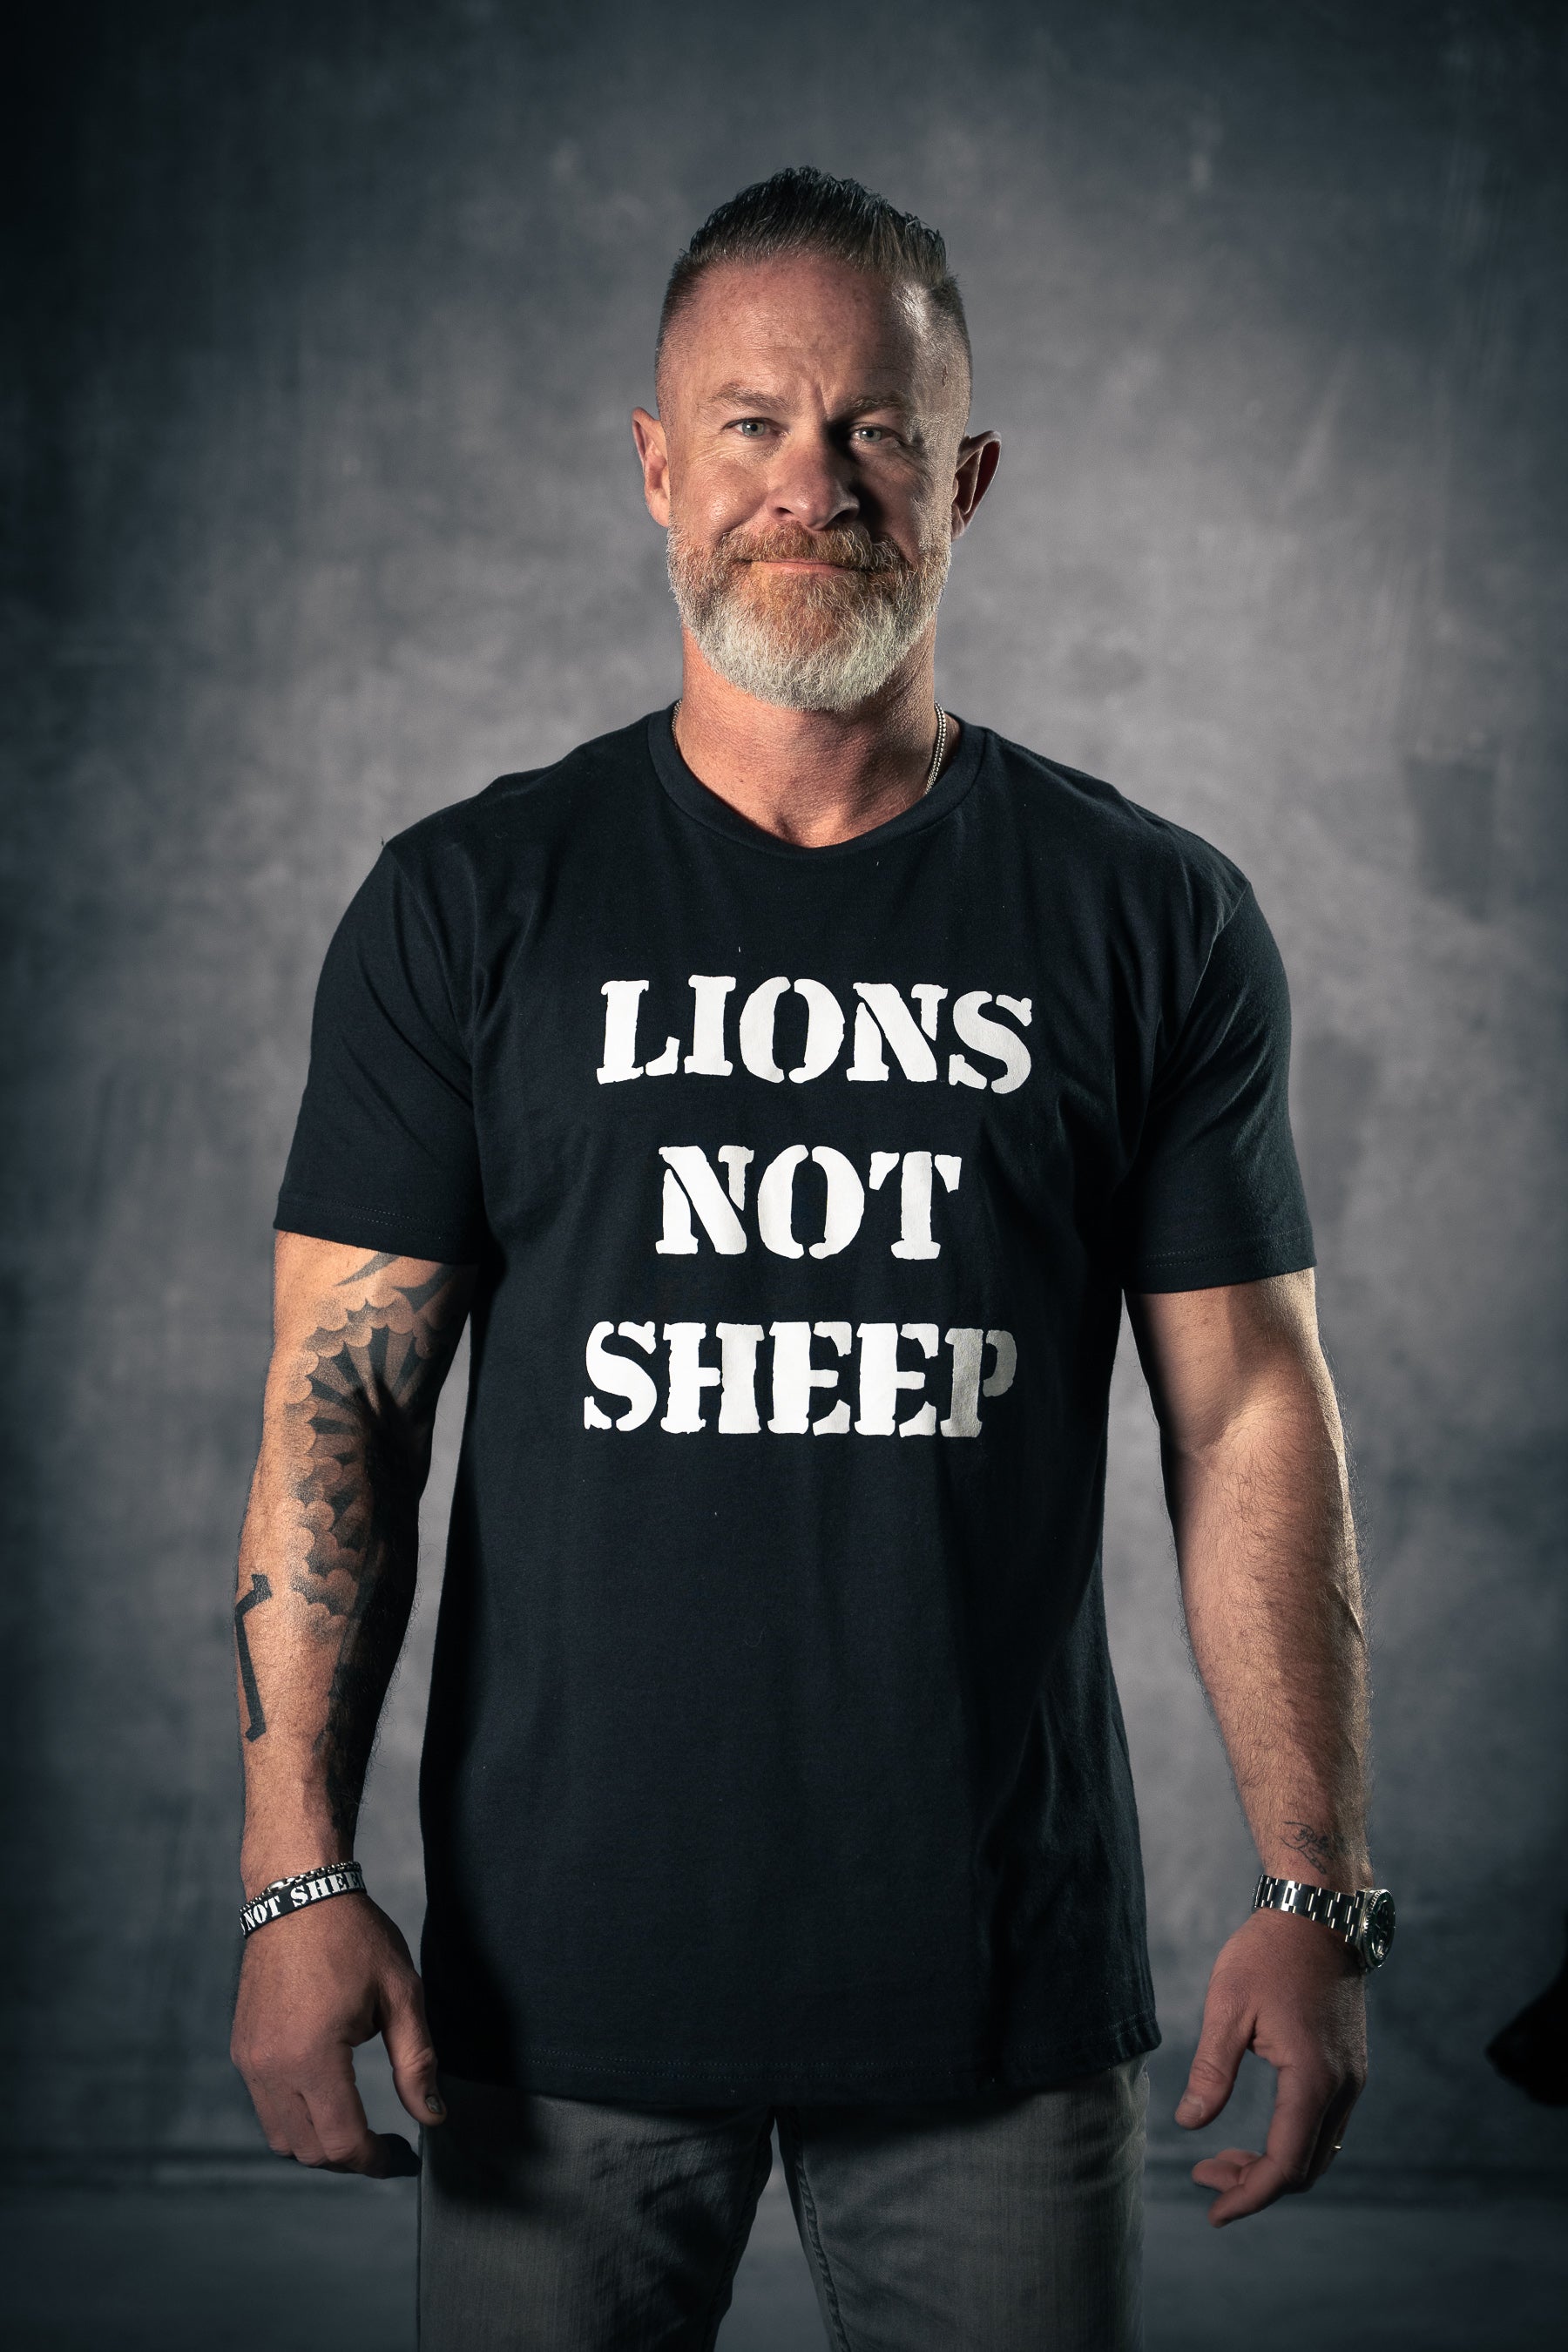 LIONS NOT SHEEP OG Tee - Lions Not Sheep ®